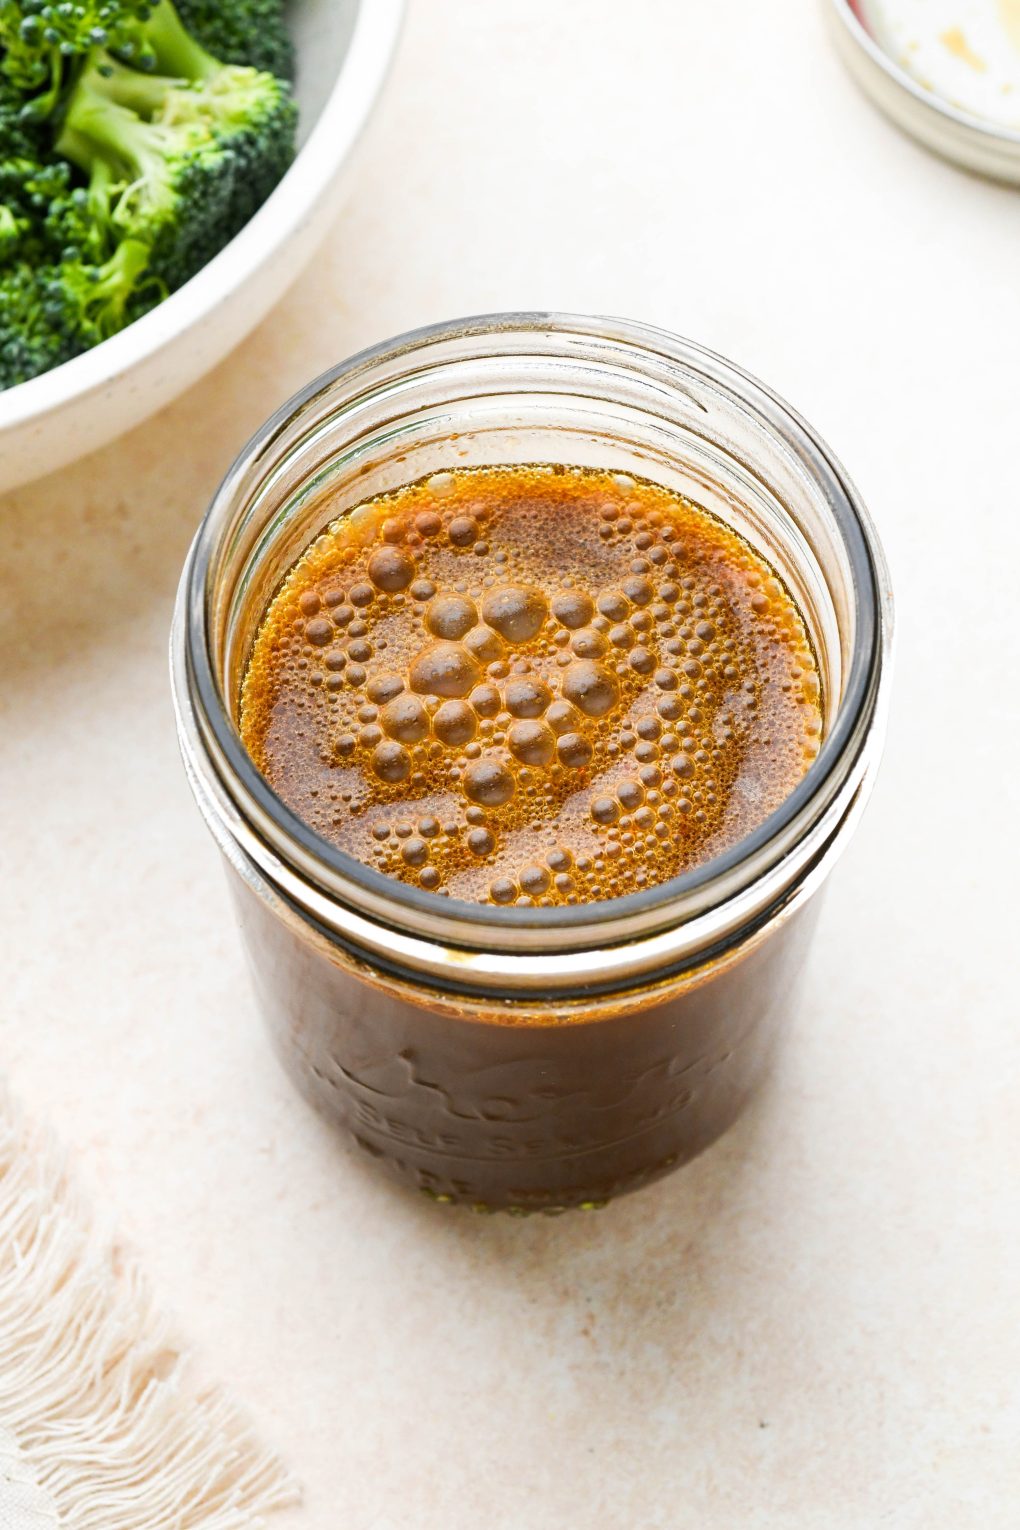 A small glass ball jar of healthy homemade stir fry sauce, next to a bowl of broccoli florets.
